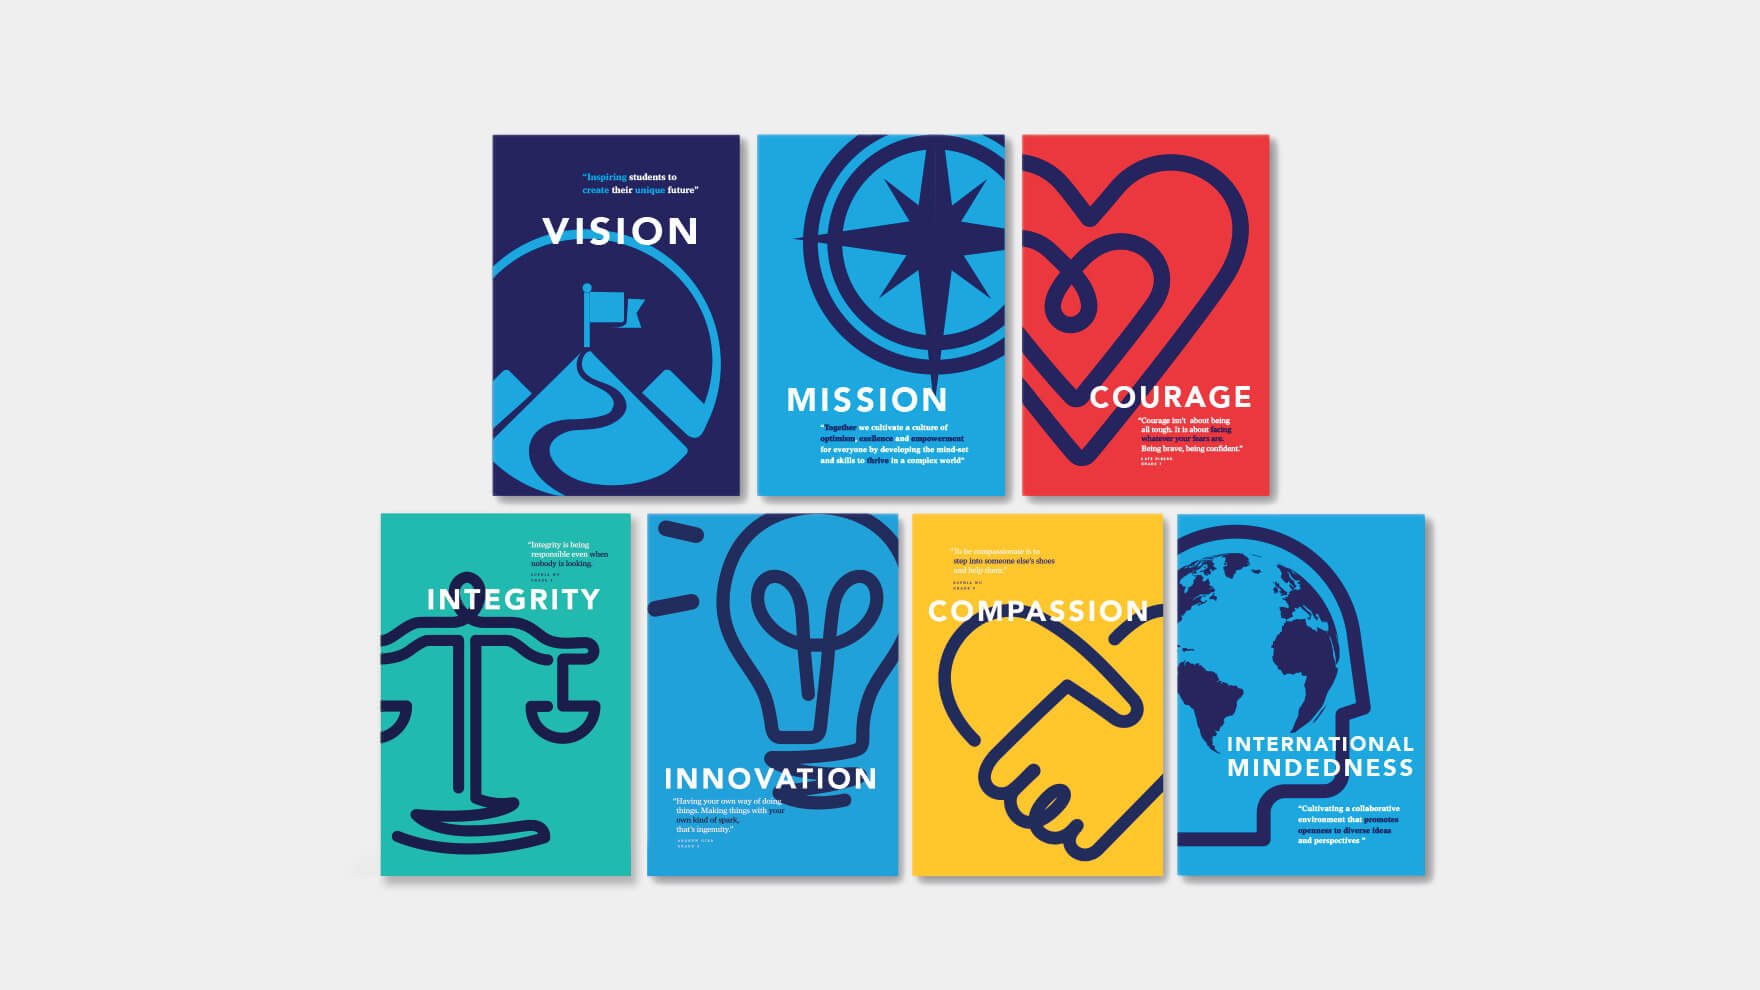 Corporate Agency Hong Kong_SAIS_Corporate Identity Design_Value Icon Design 2021-1_Cheddar Media_1760